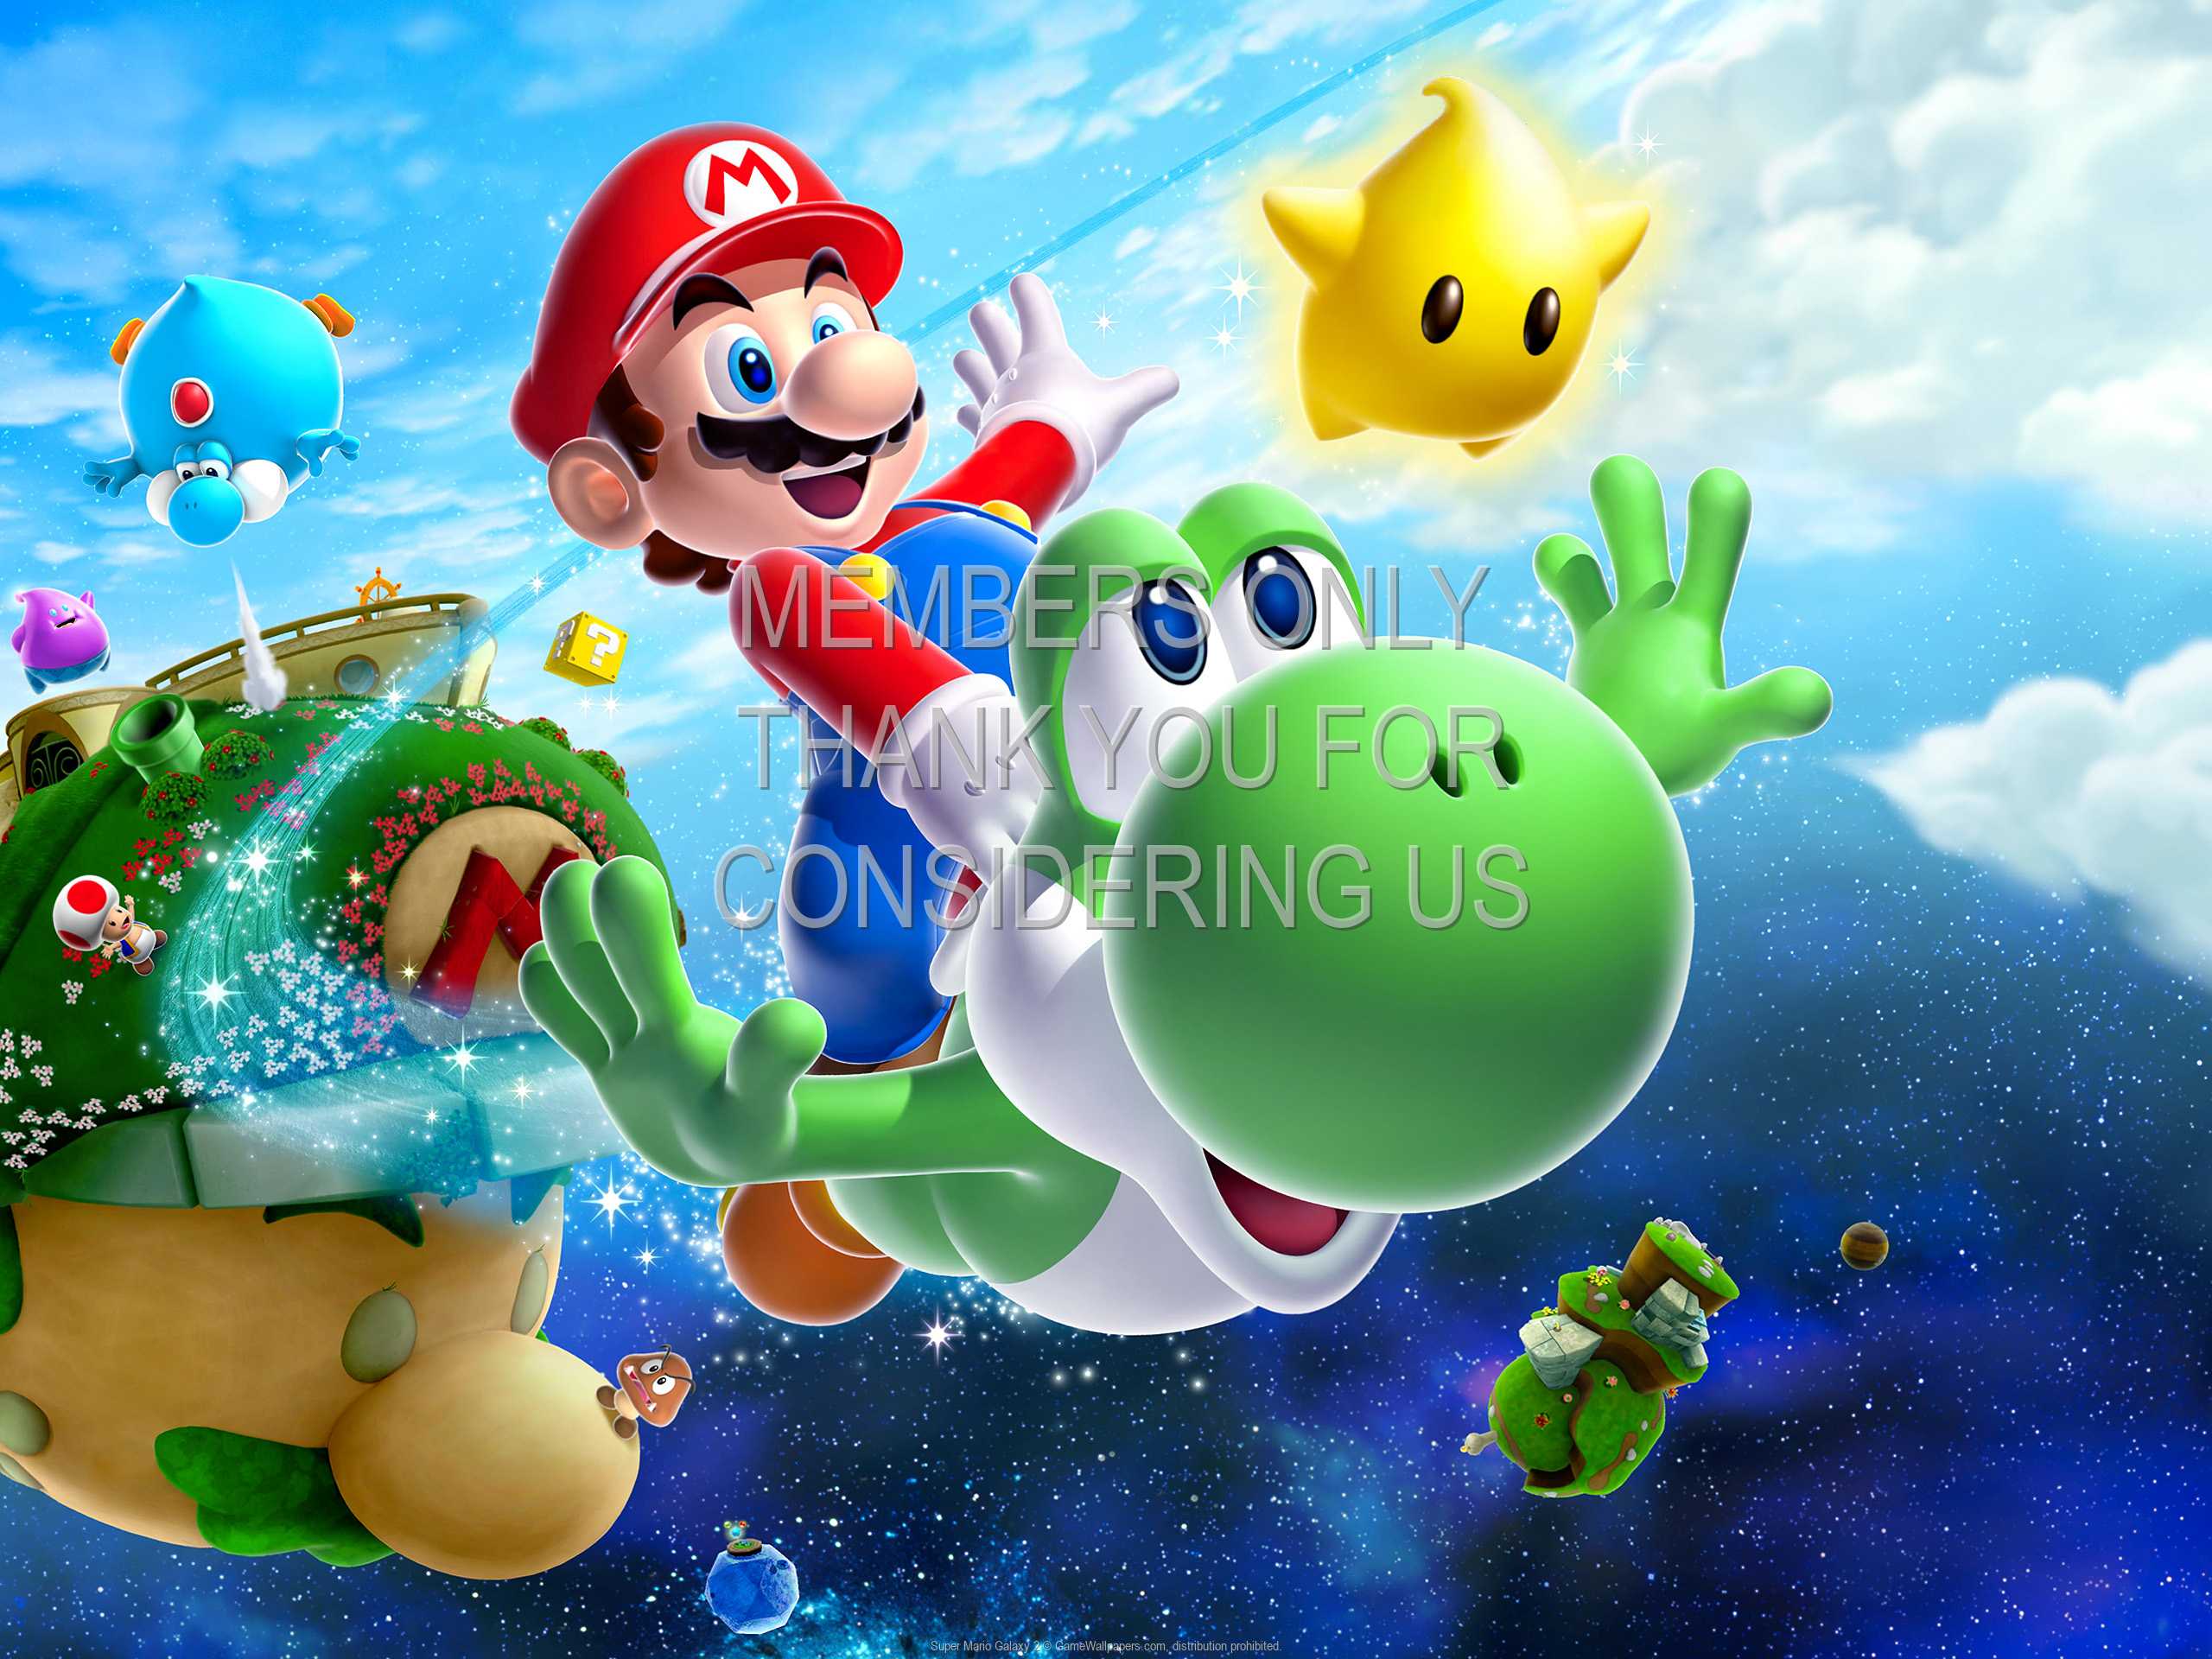 Super Mario Galaxy 2 1080p Horizontal Mobile wallpaper or background 01